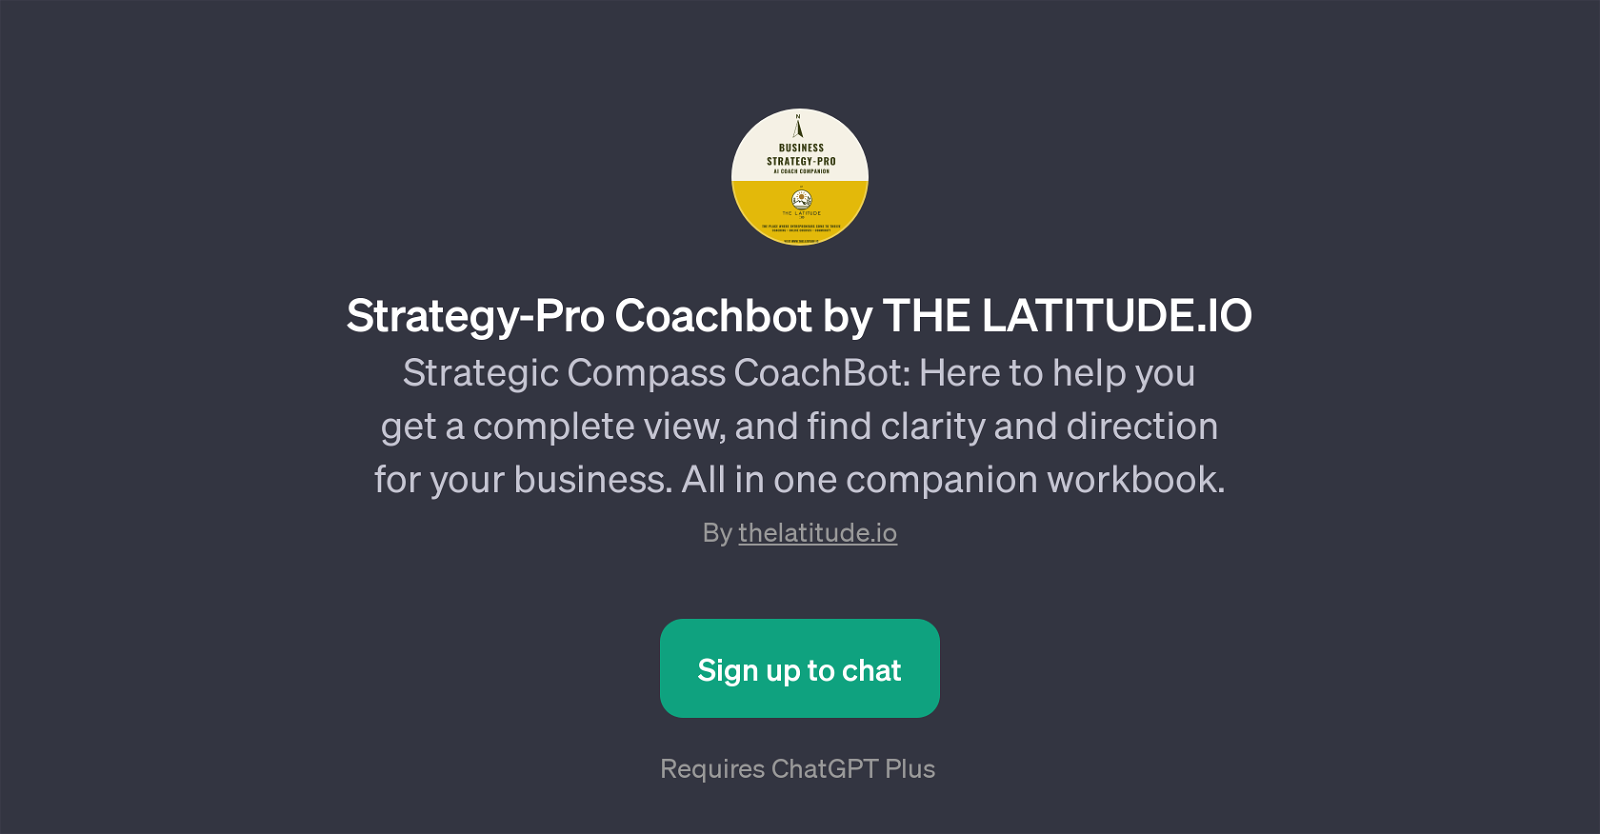 Strategy-Pro Coachbot by THE LATITUDE.IO website